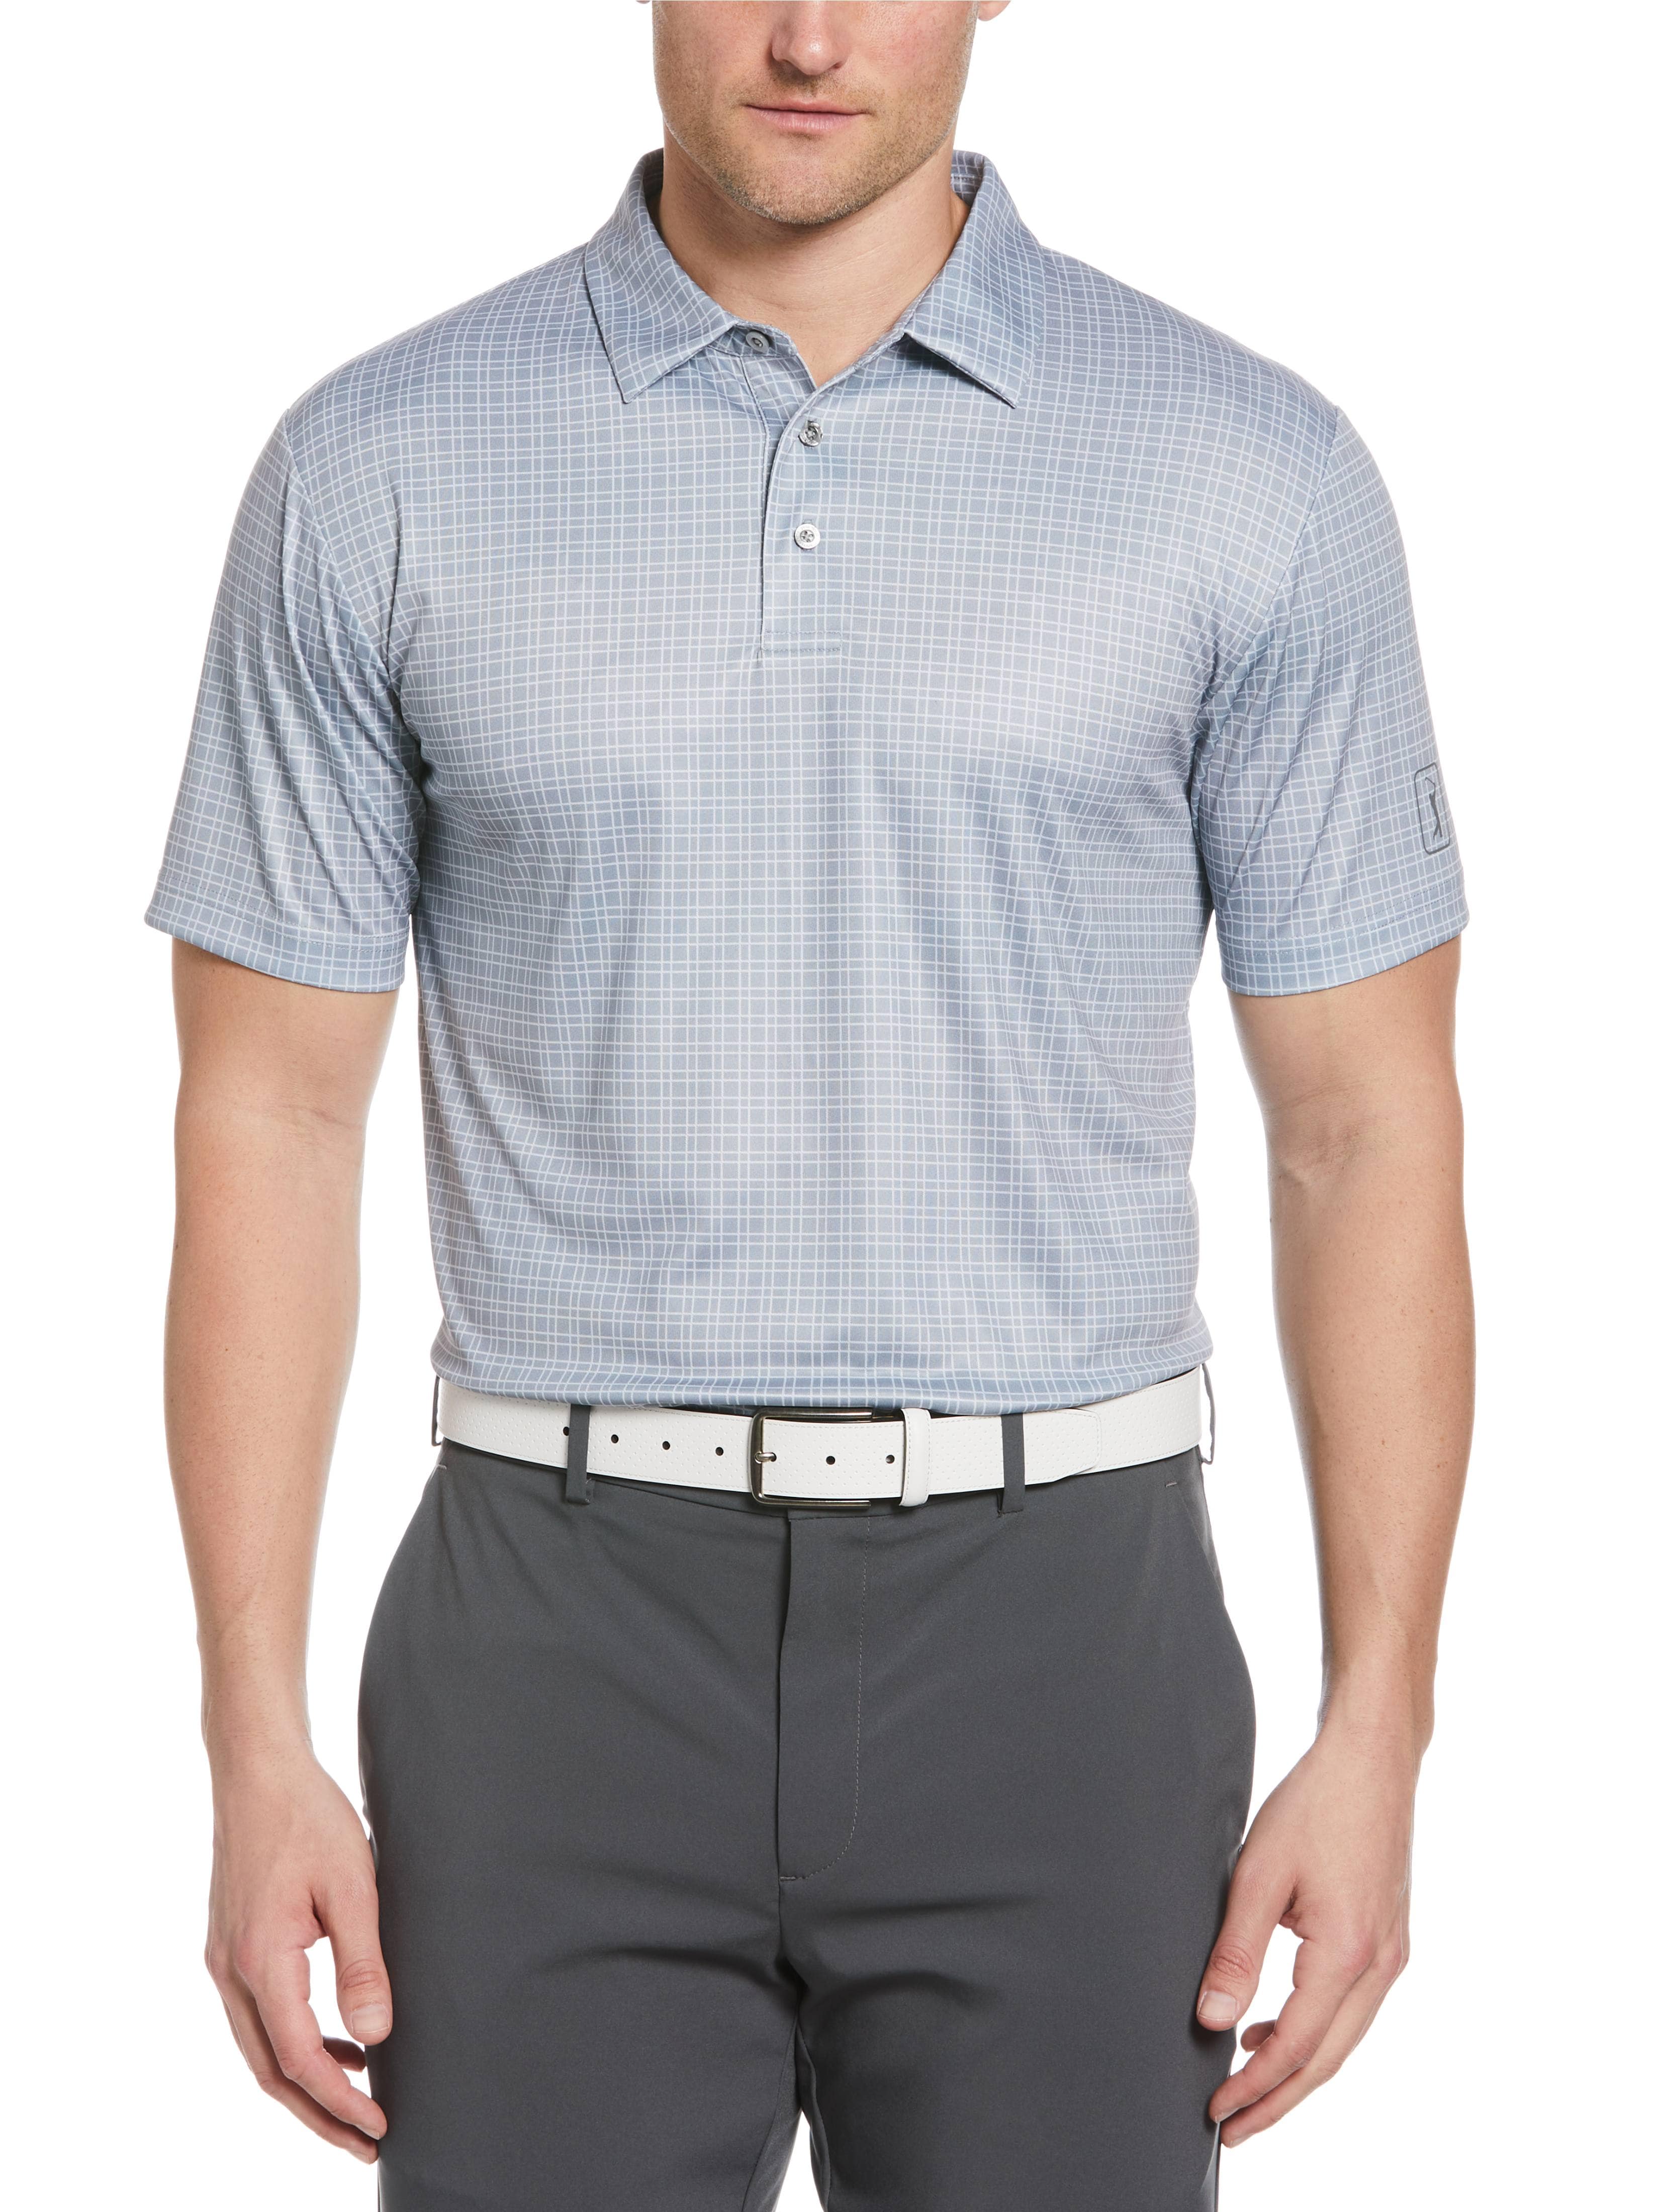 PGA TOUR Apparel Mens Menswear Print Golf Polo Shirt, Size Medium, Tradewinds Gray, 100% Polyester | Golf Apparel Shop